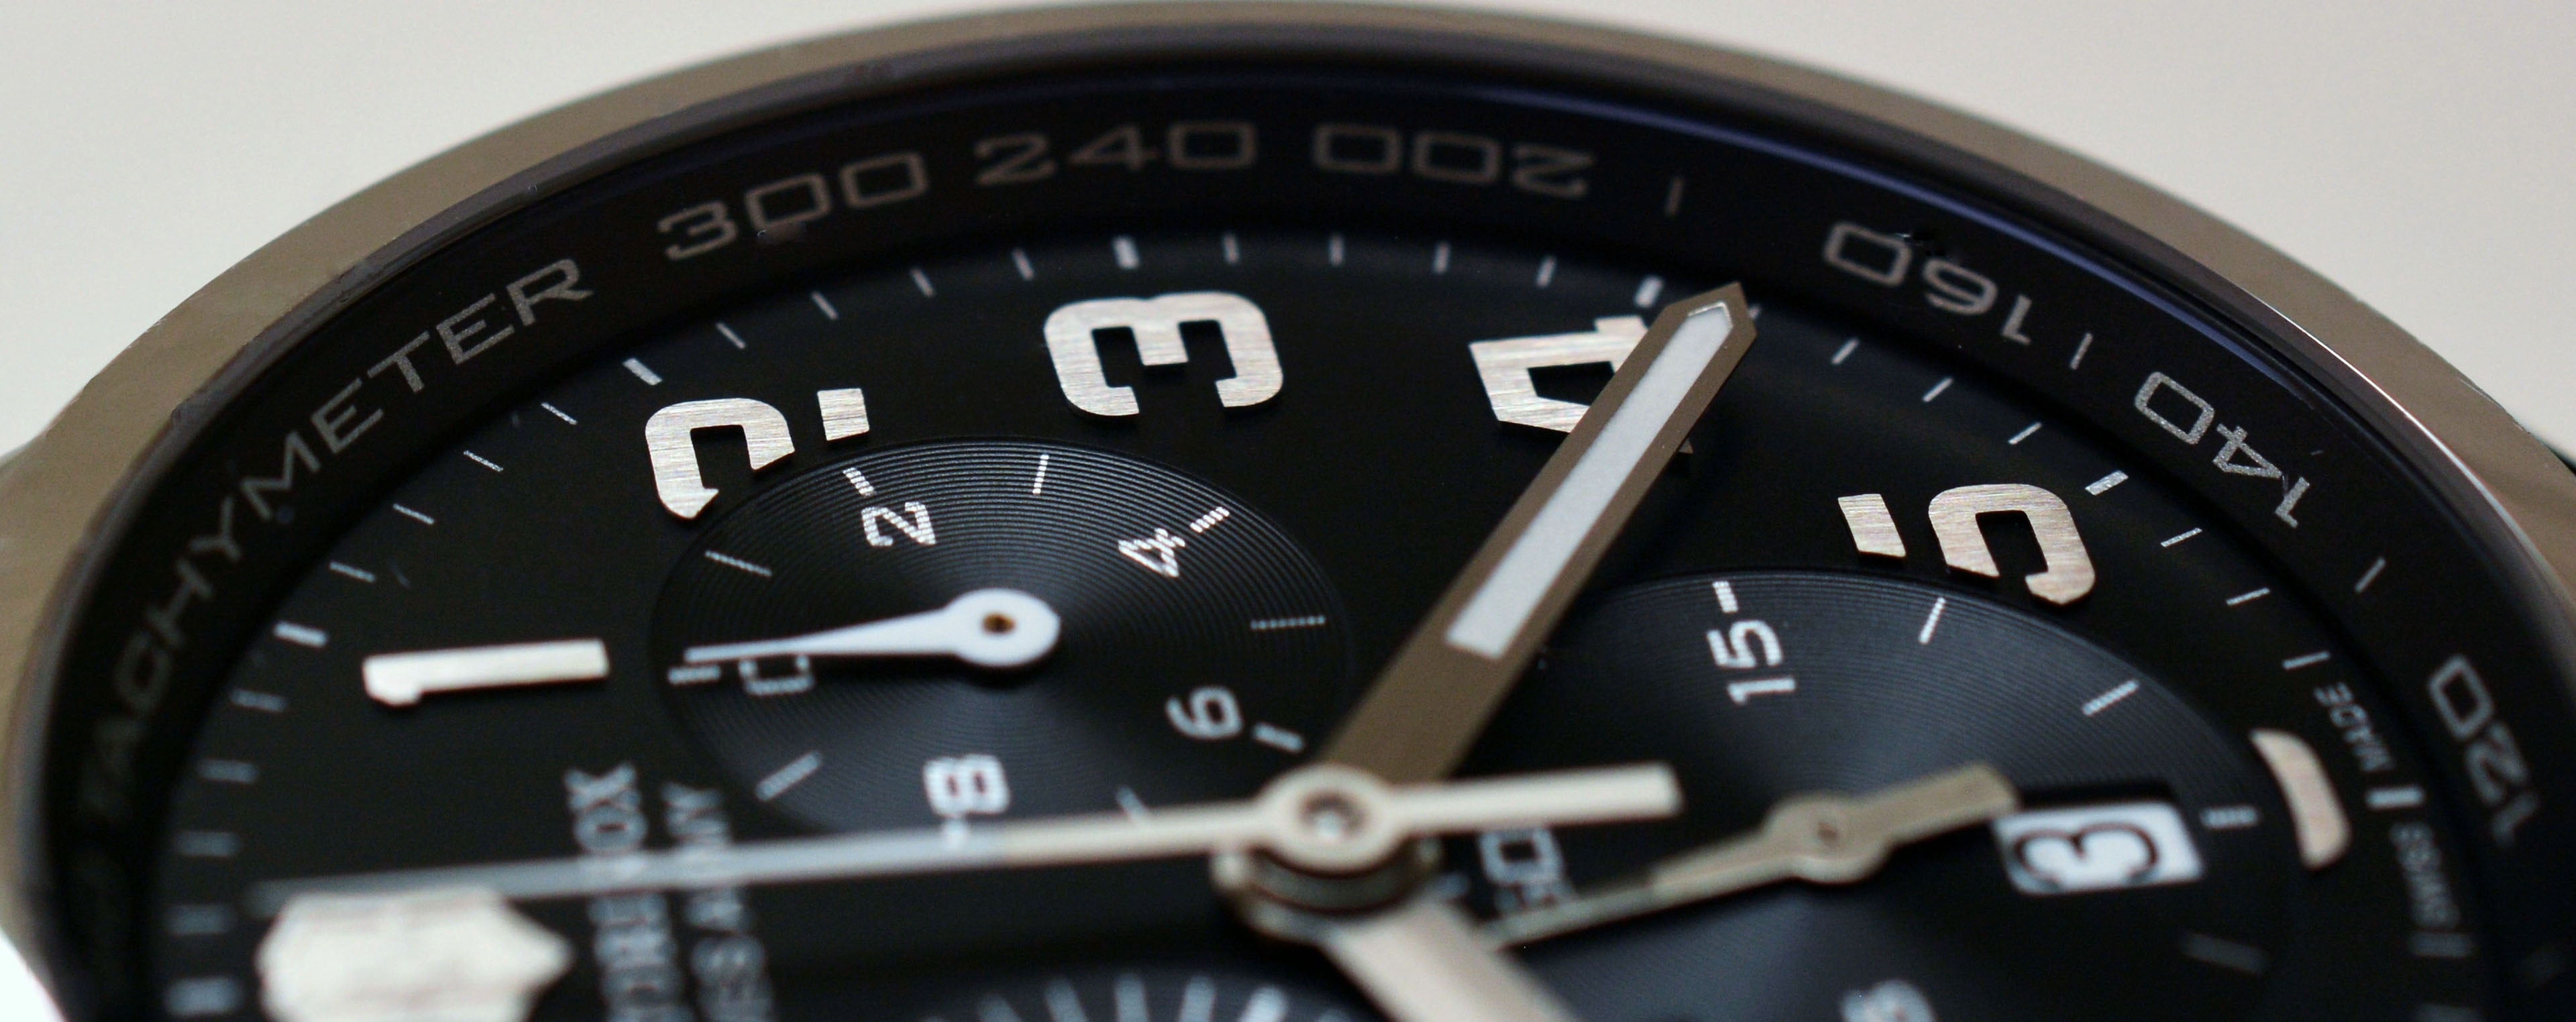 grey round chronograph watch